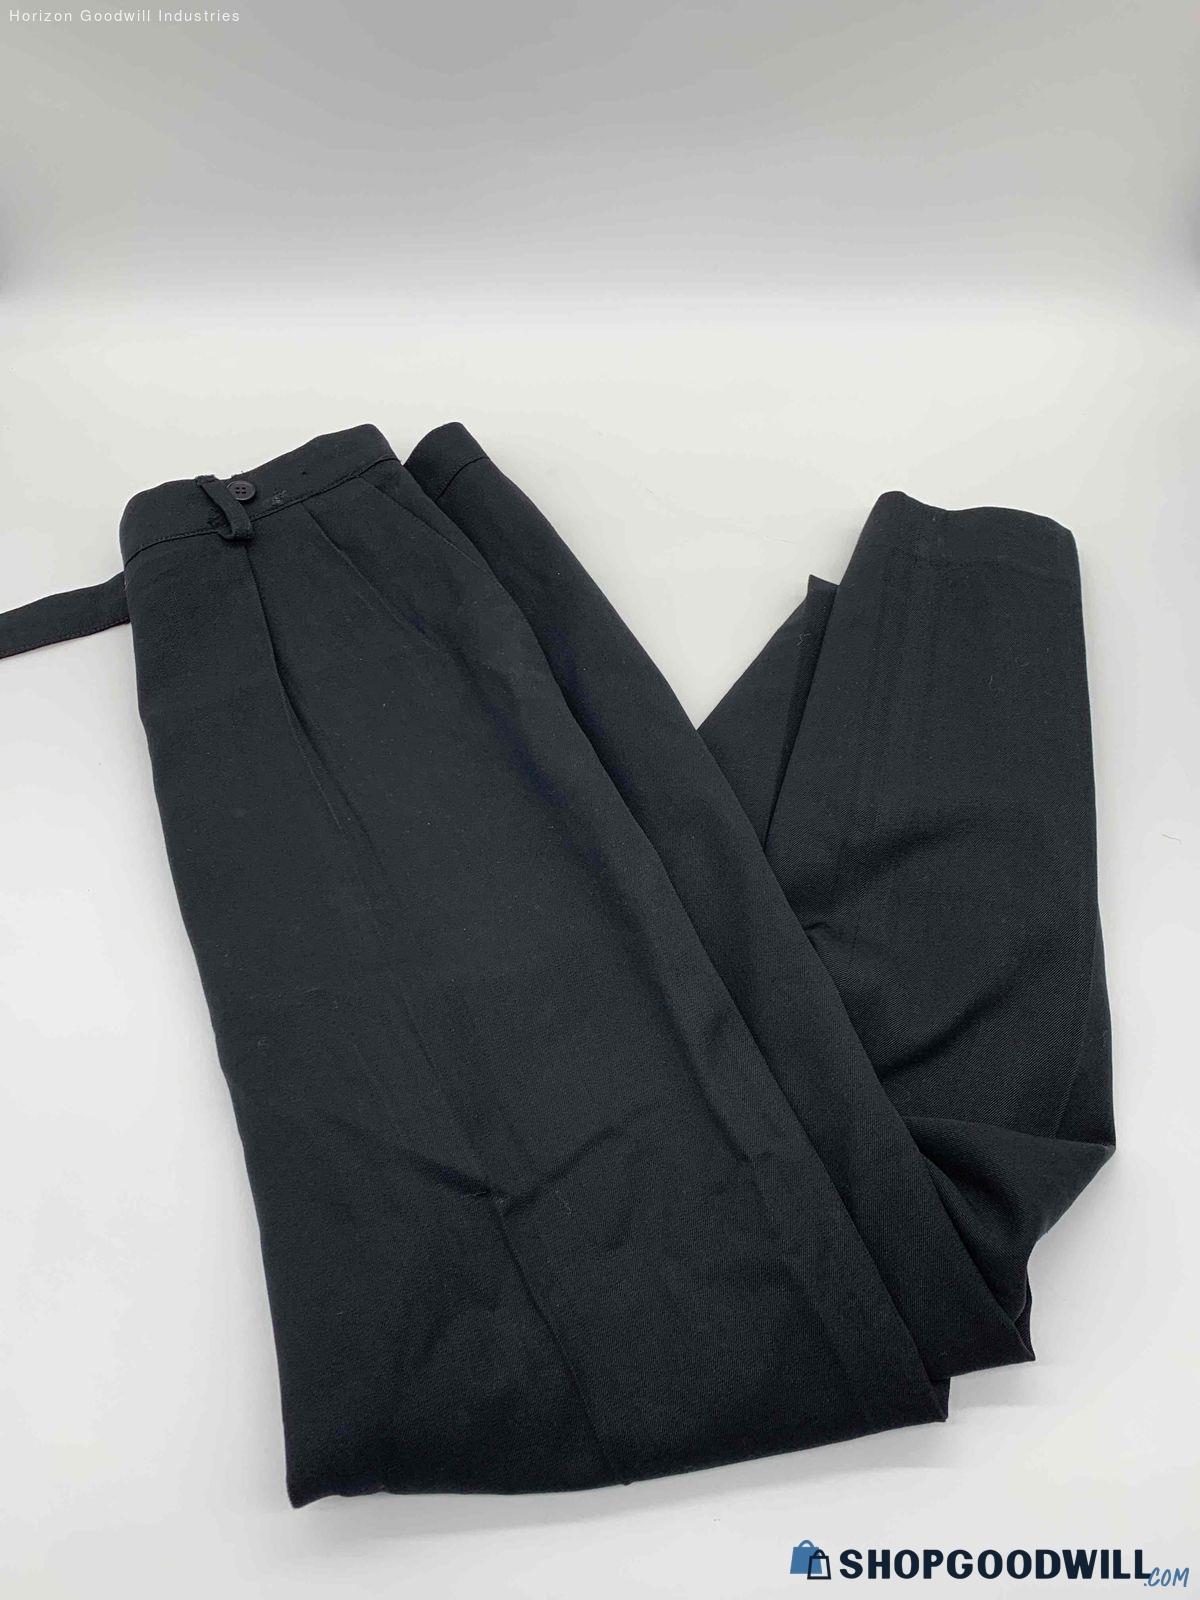 Hawksley & Wight Black Pleated Wool Pants - Size 6P - shopgoodwill.com